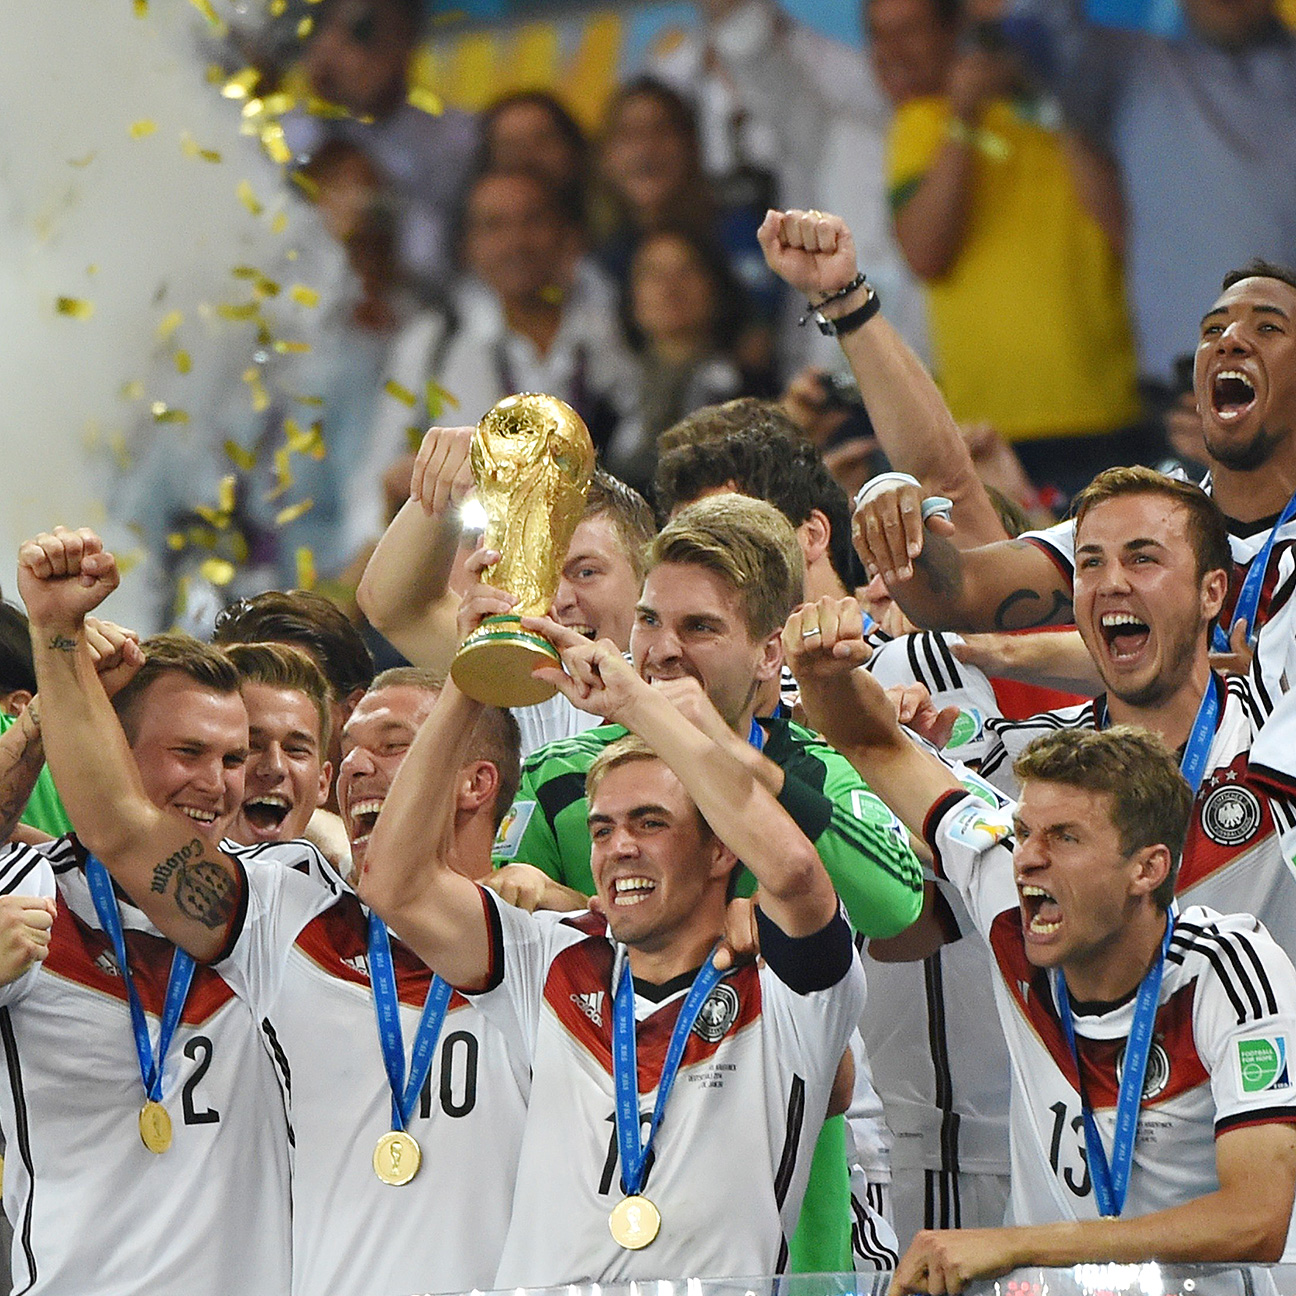 Germany 1-0 Argentina (Jul 13, 2014) Game Analysis - ESPN